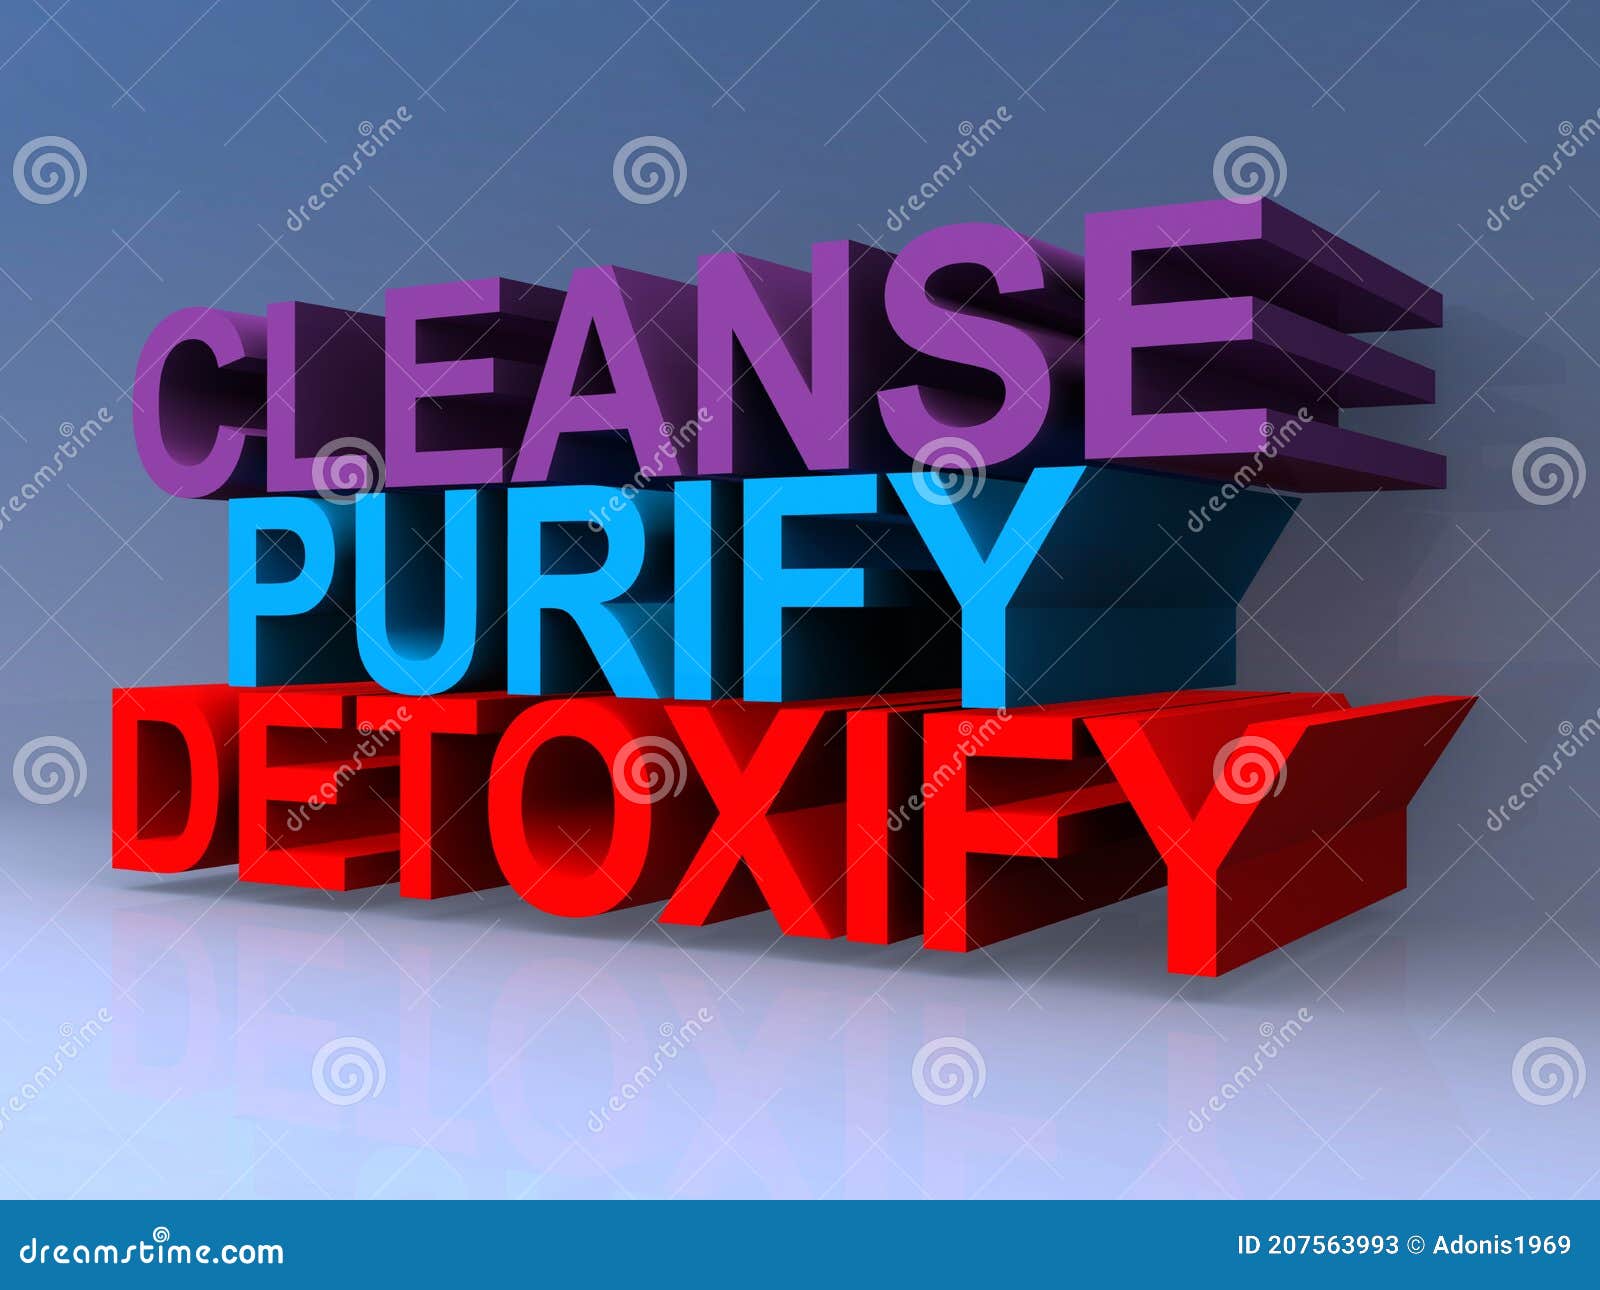 cleanse purify detoxify on blue